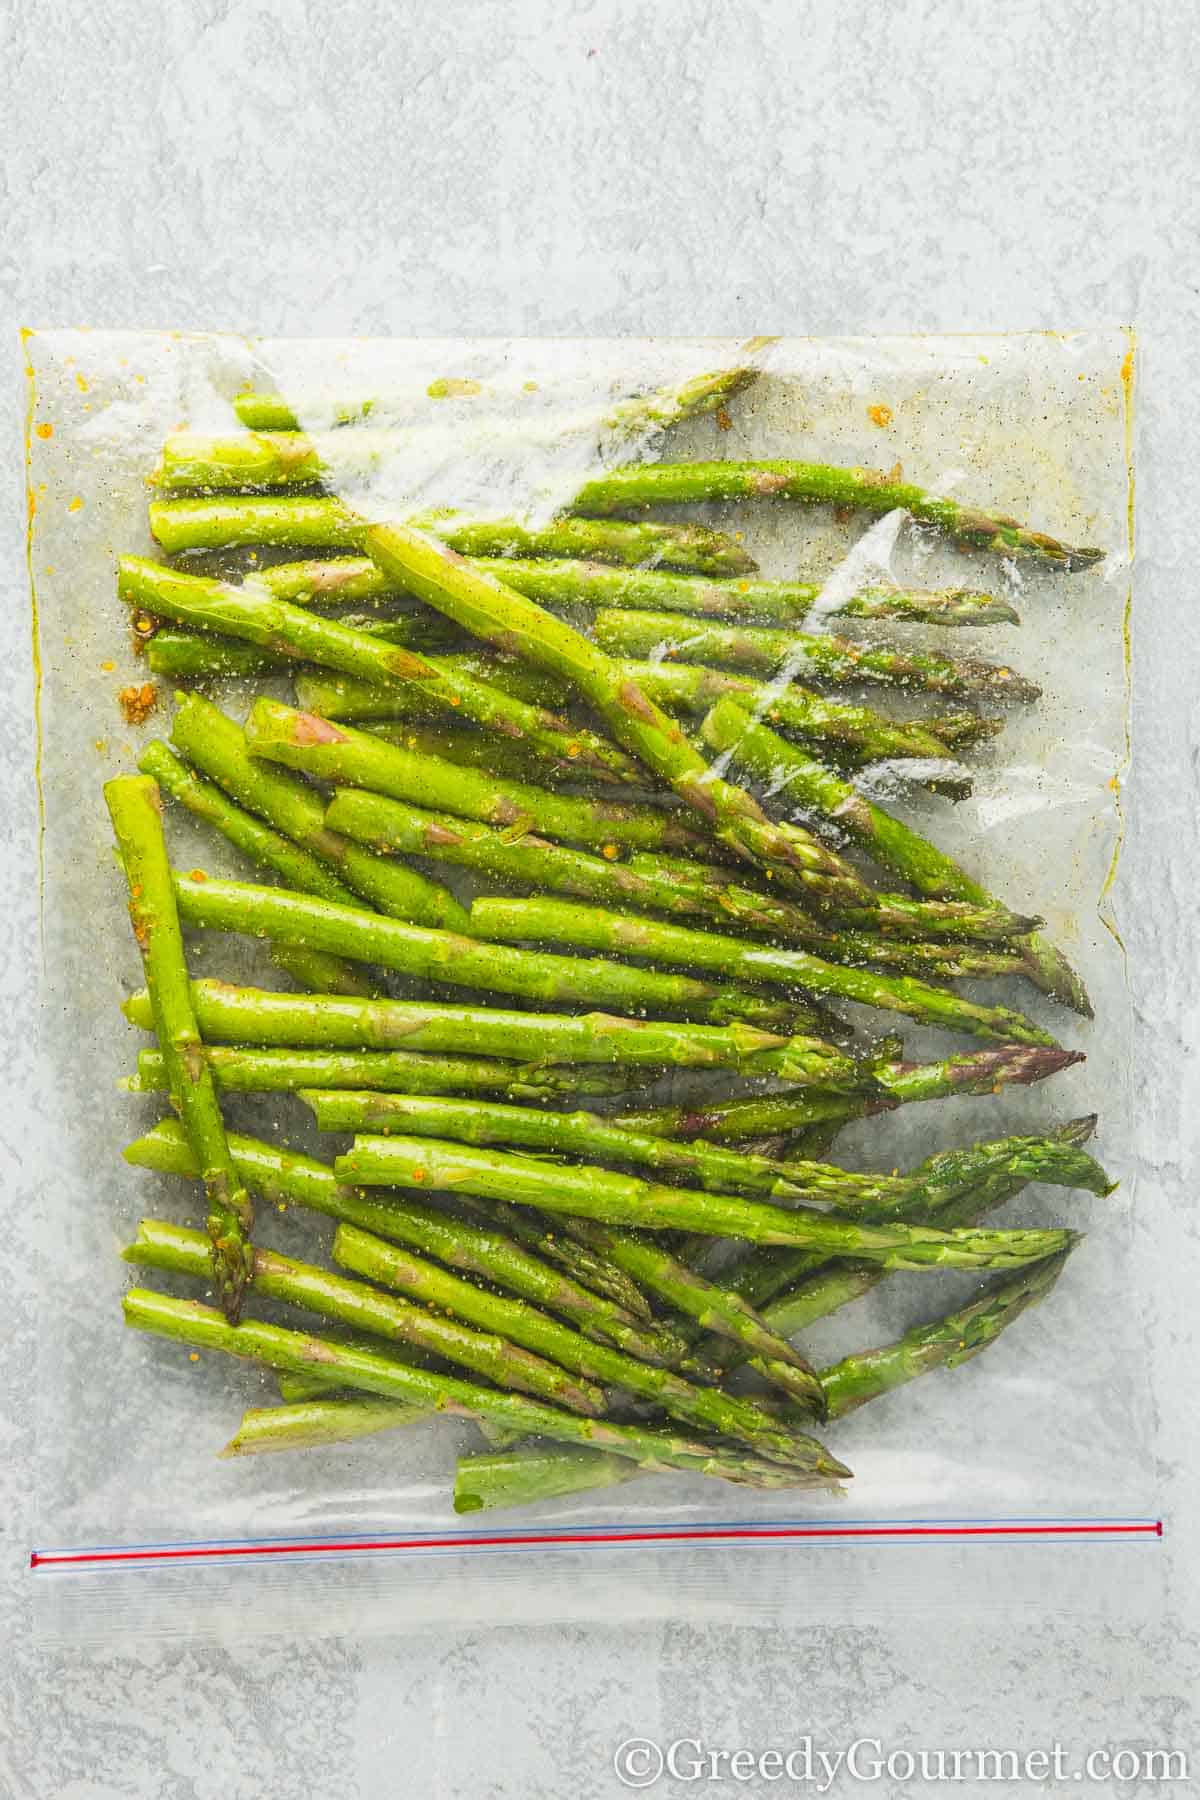 Seasoning asparagus in a plastic bag.